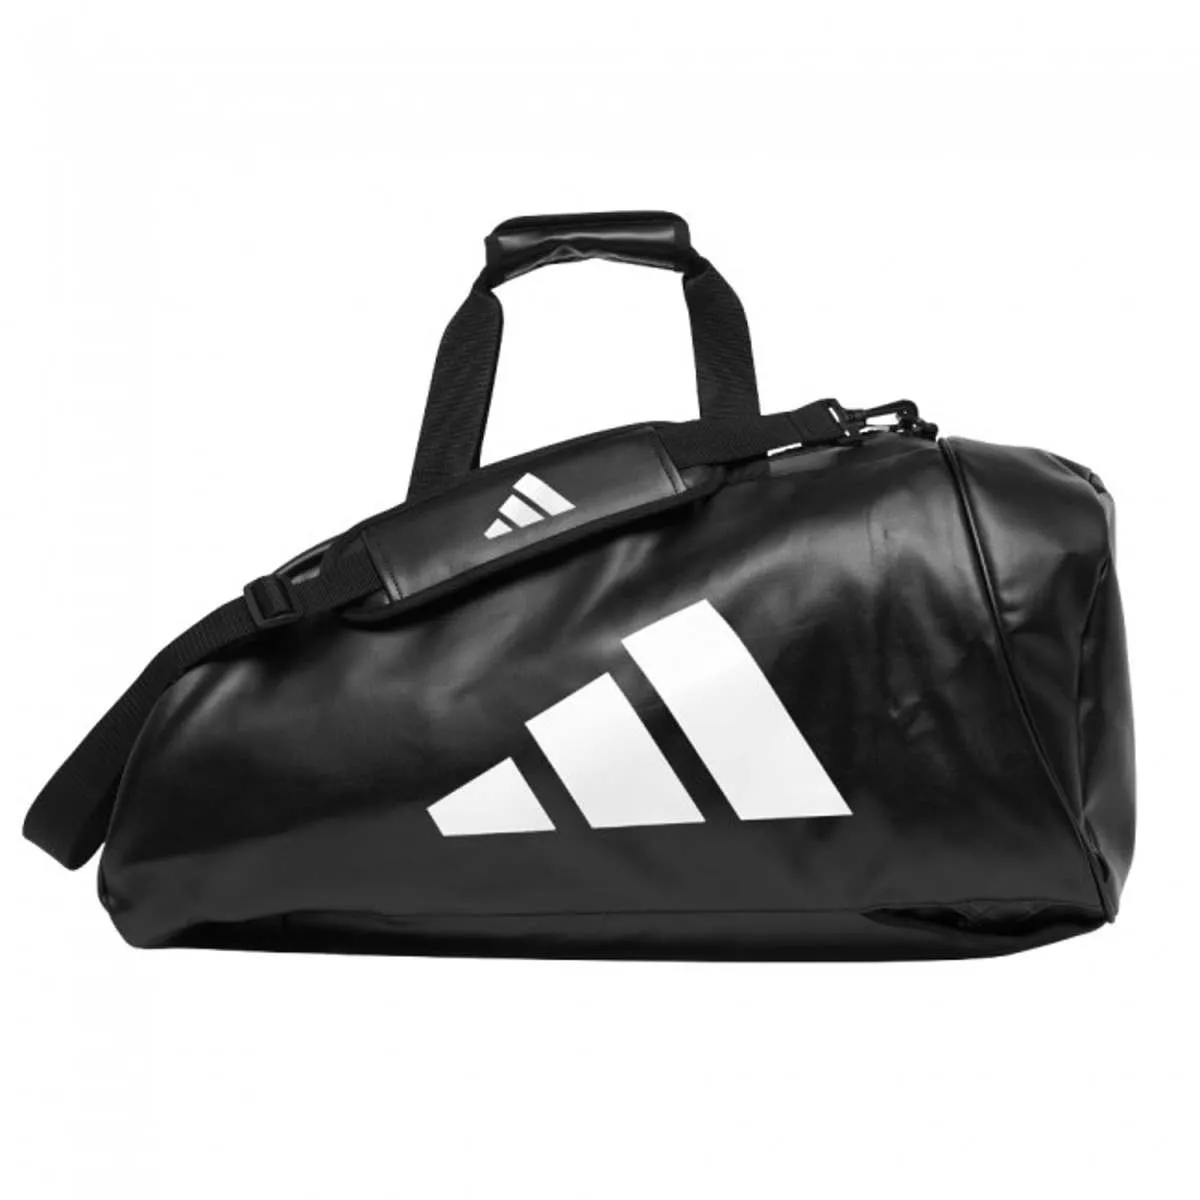 adidas sports bag sports rucksack black/white imitation leather